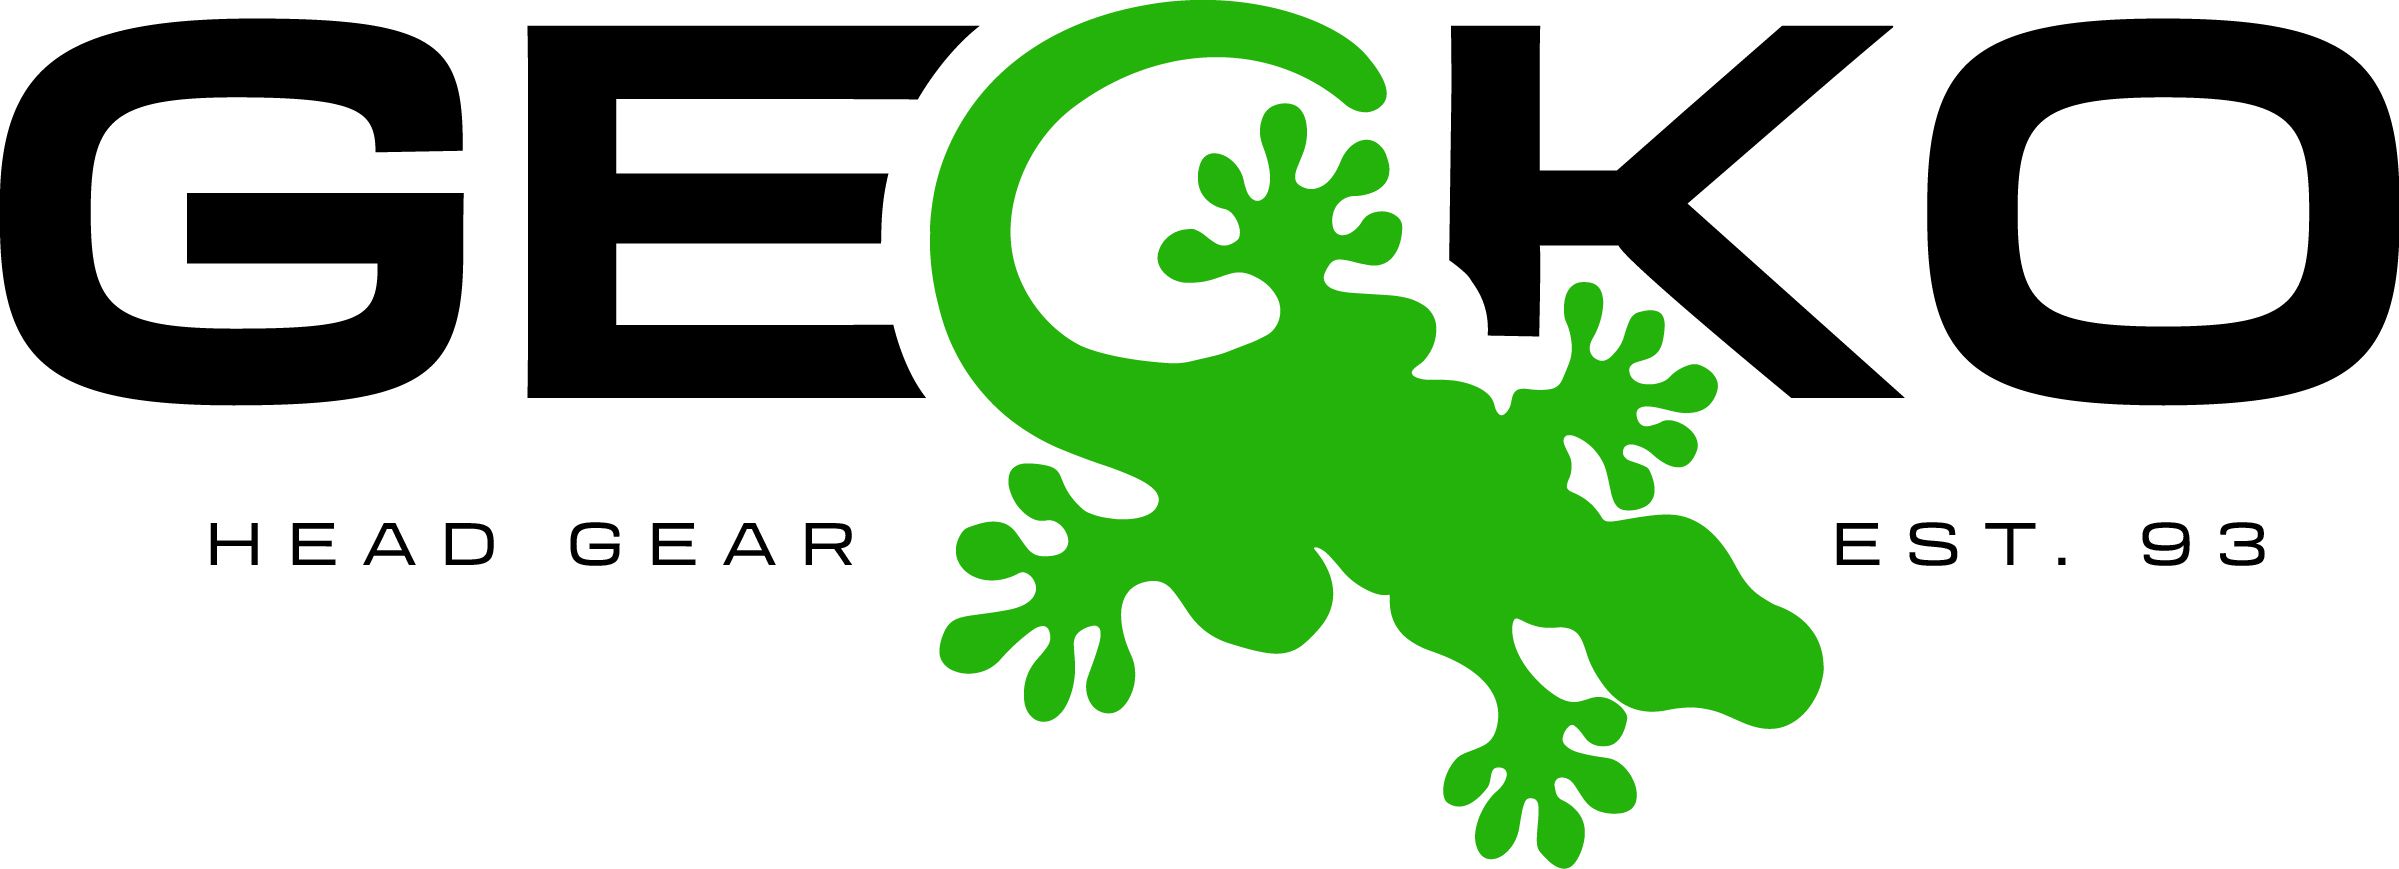 Gecko Head Gear Ltd